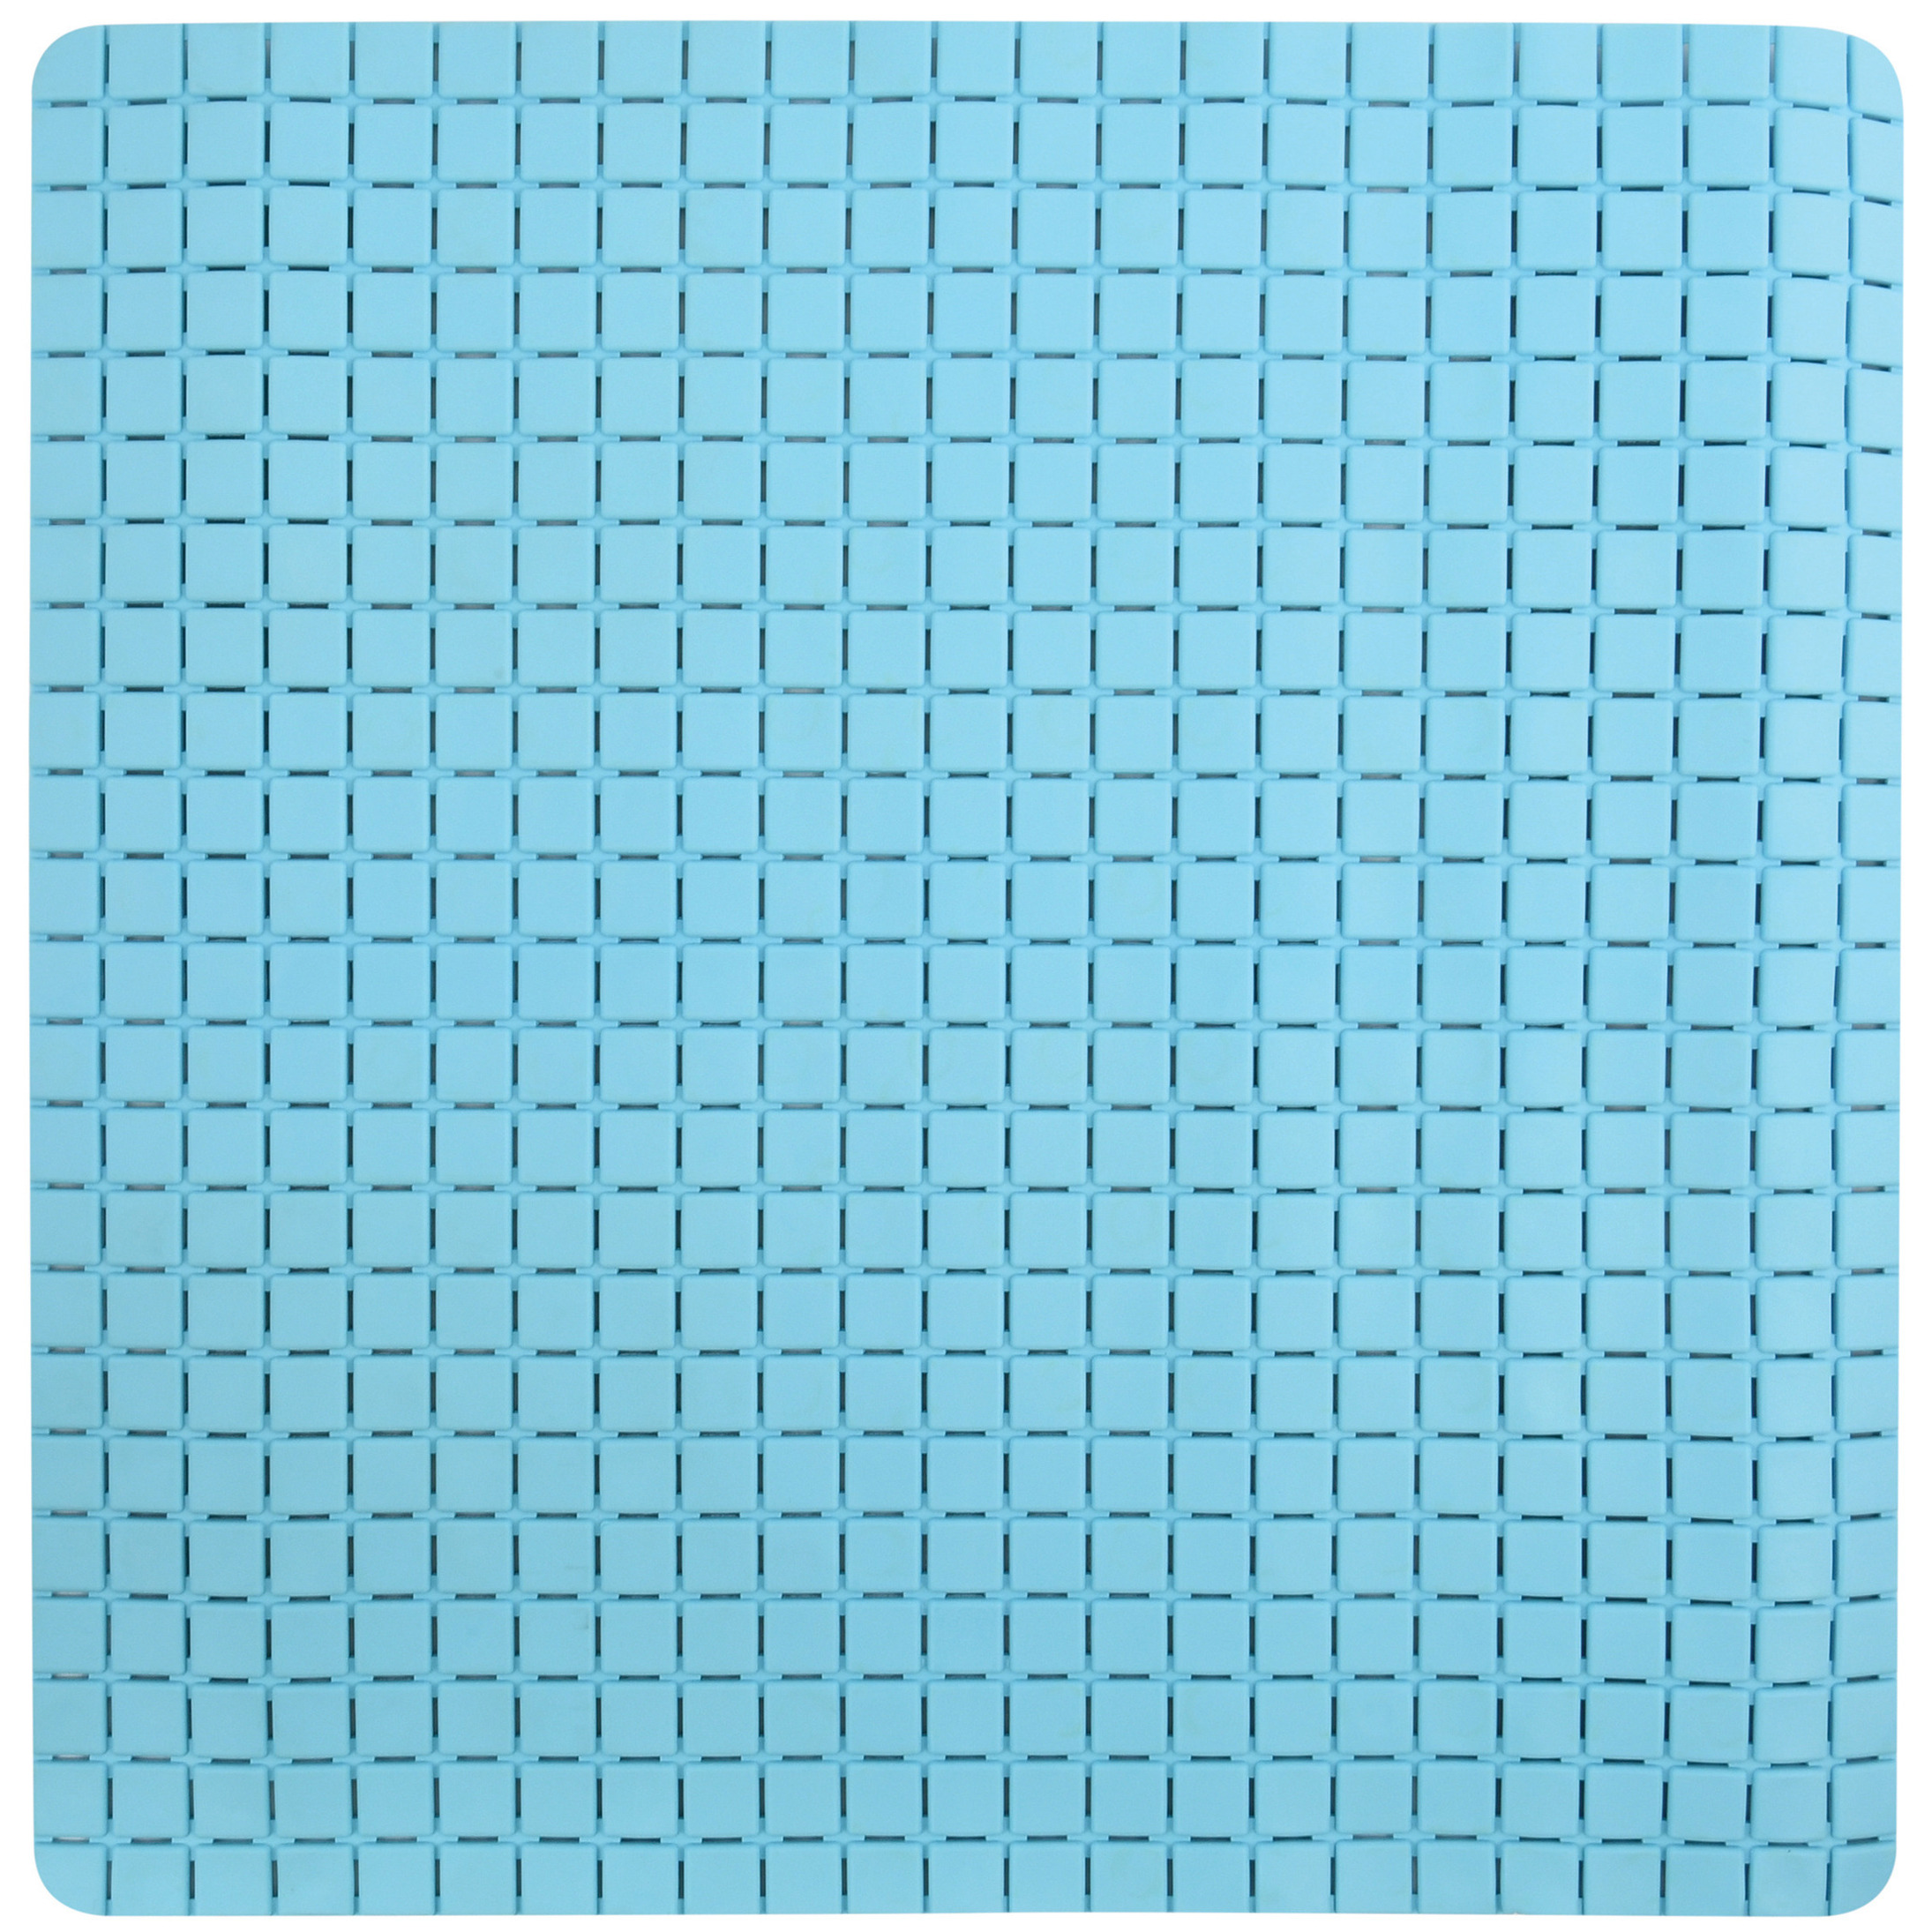 Douche-bad anti-slip mat badkamer rubber lichtblauw 54 x 54 cm vierkant